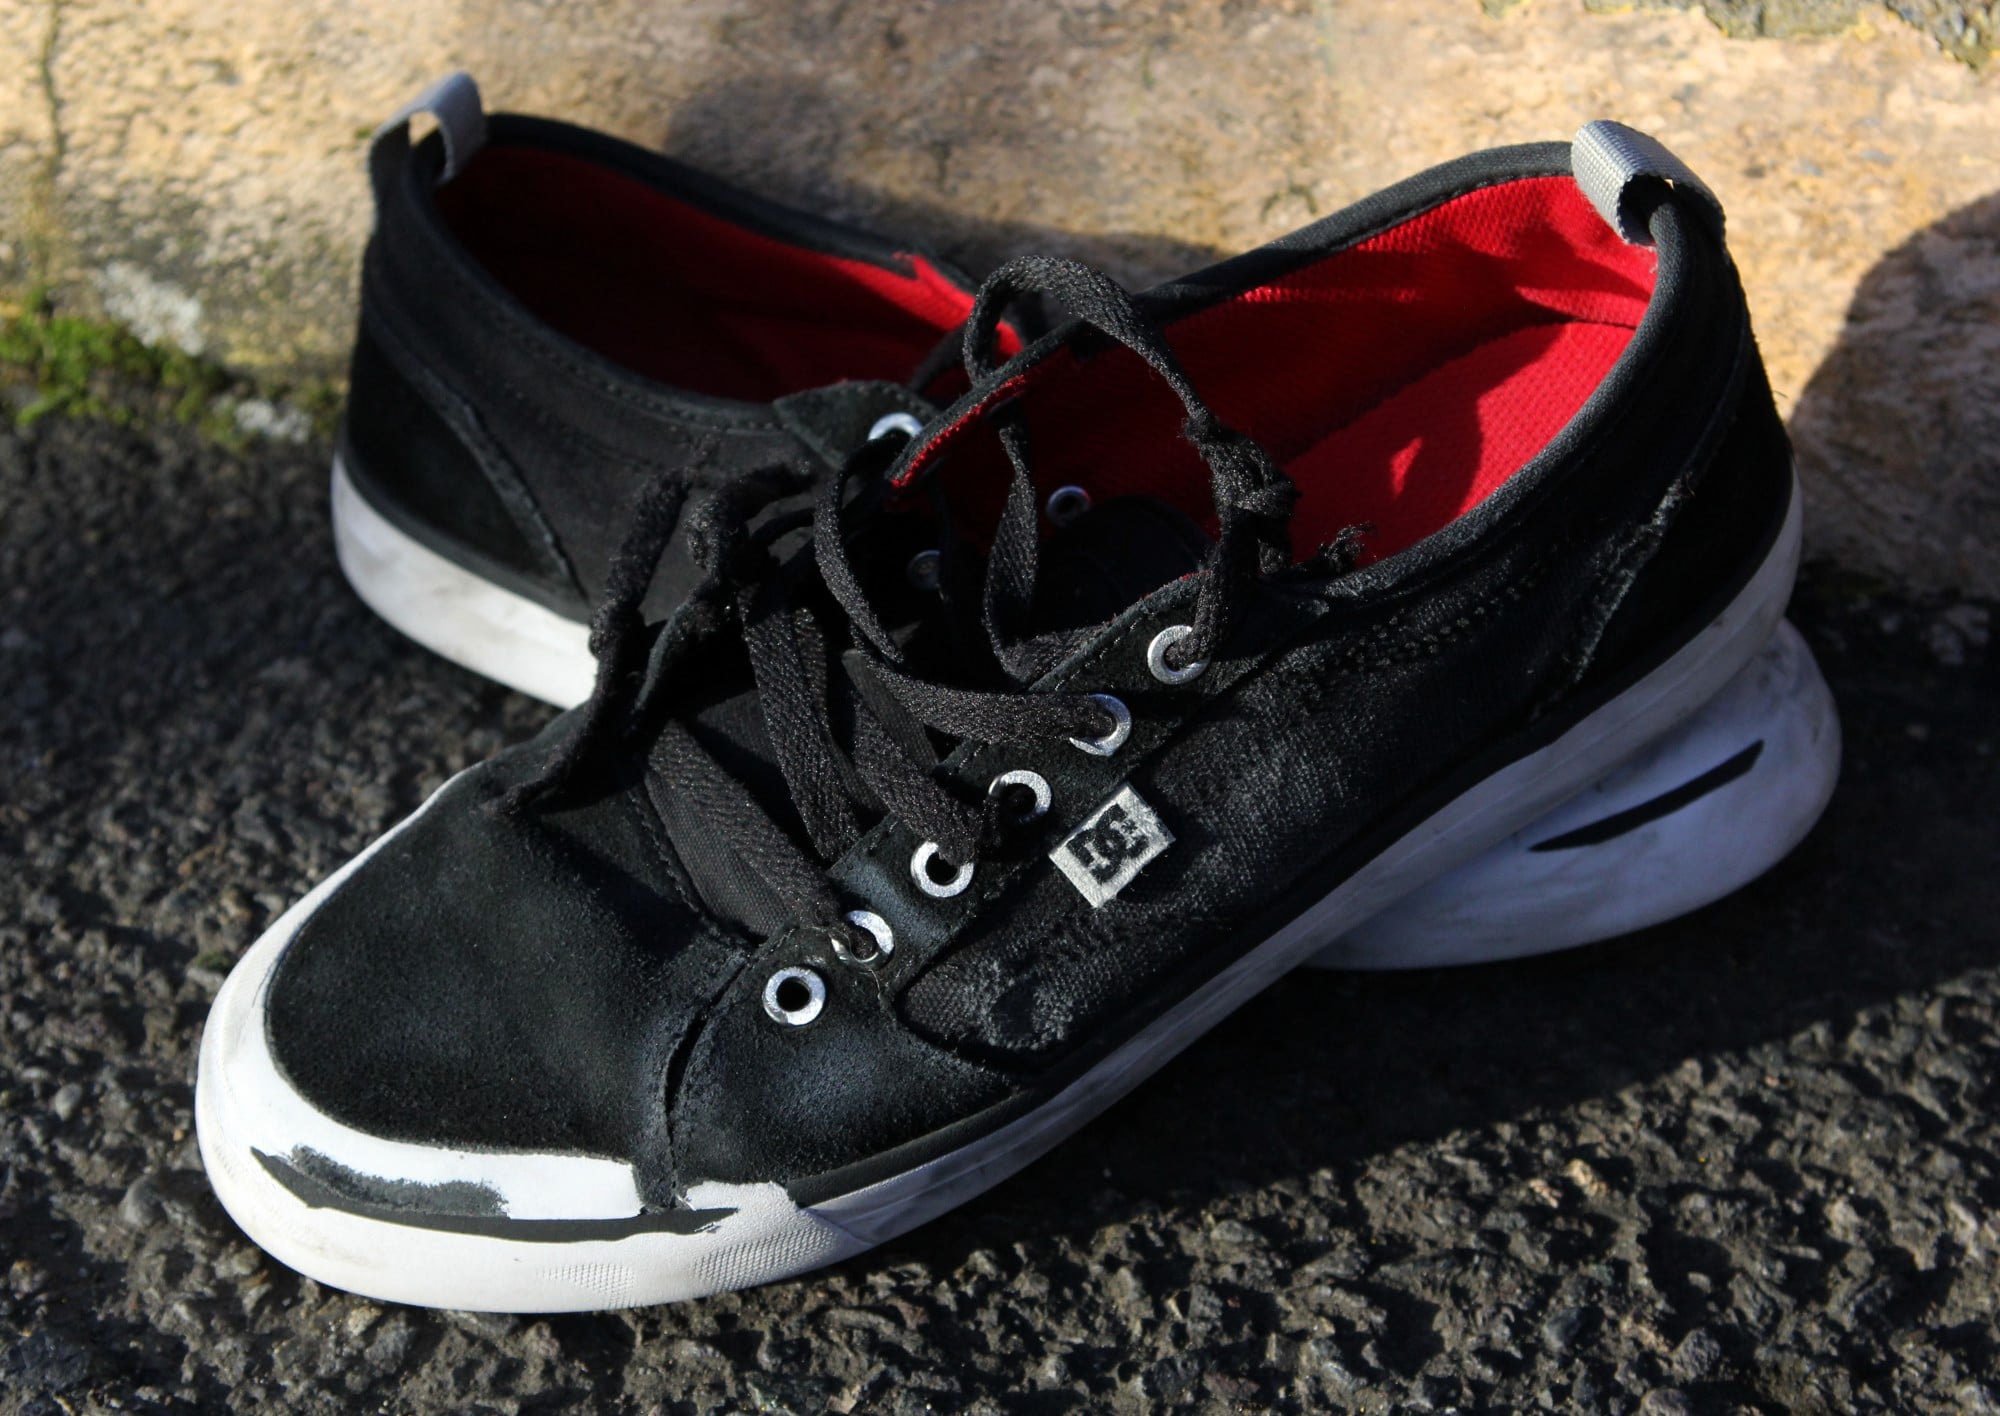 evan smith skate shoes